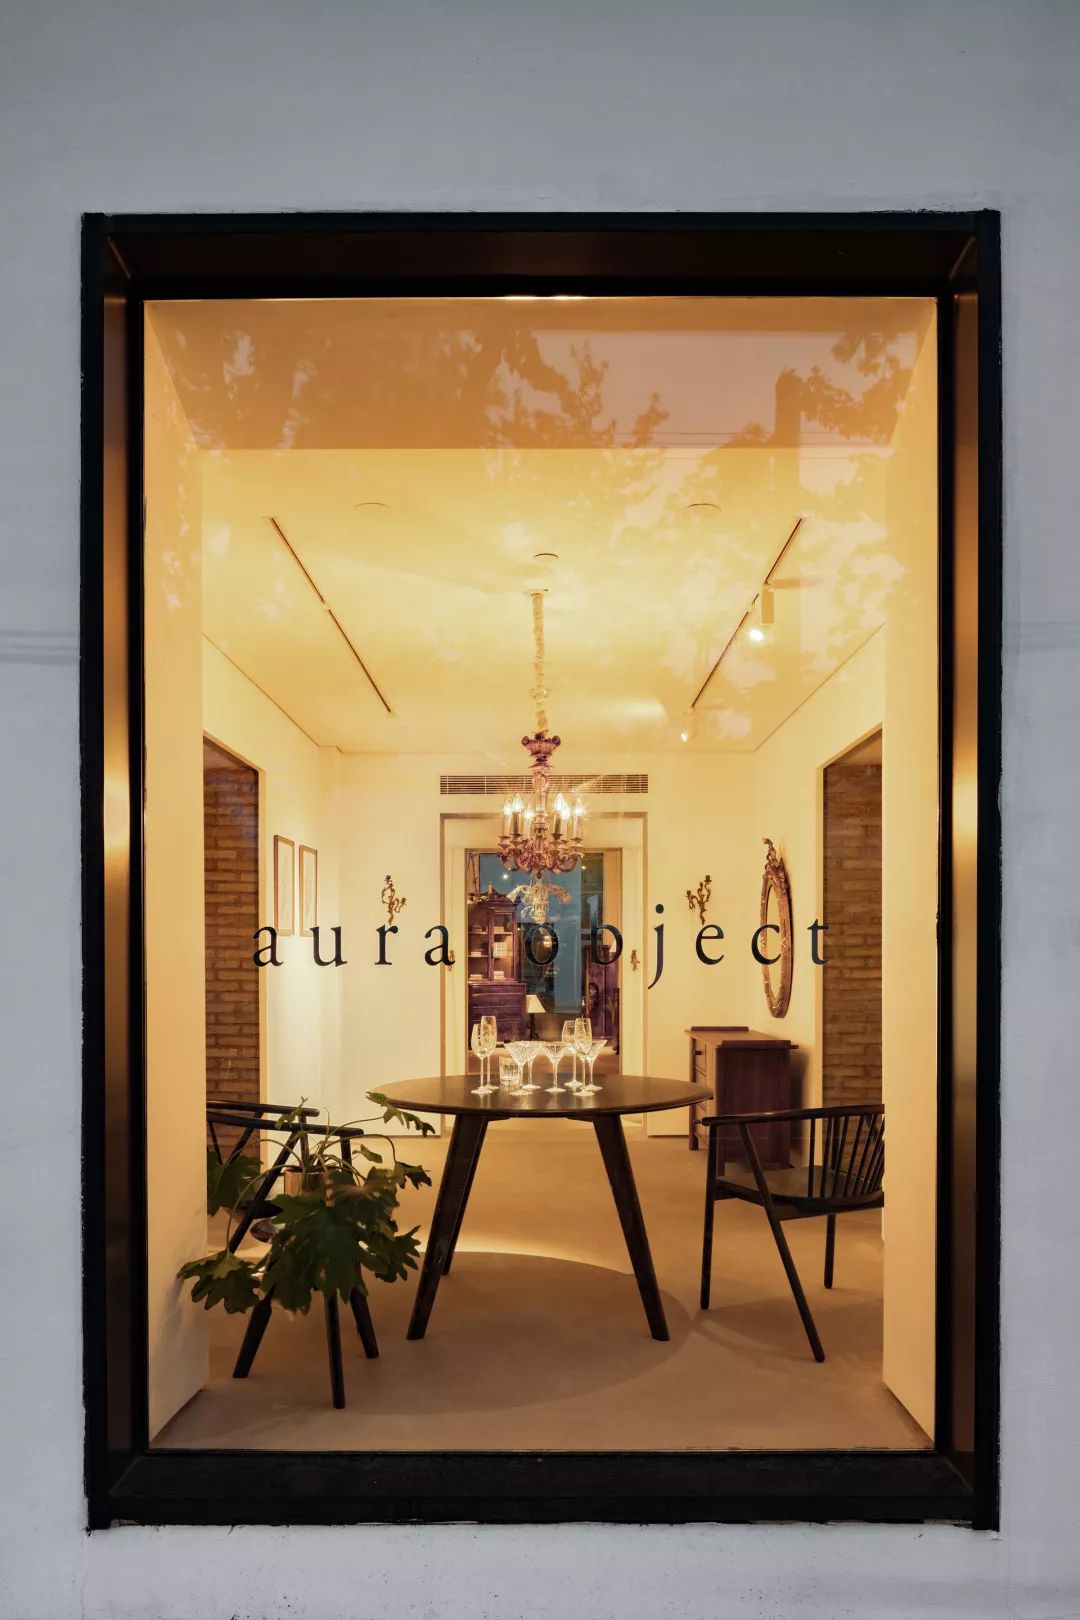 上海Aura Object Showroom建筑设计/小大建筑设计事务所